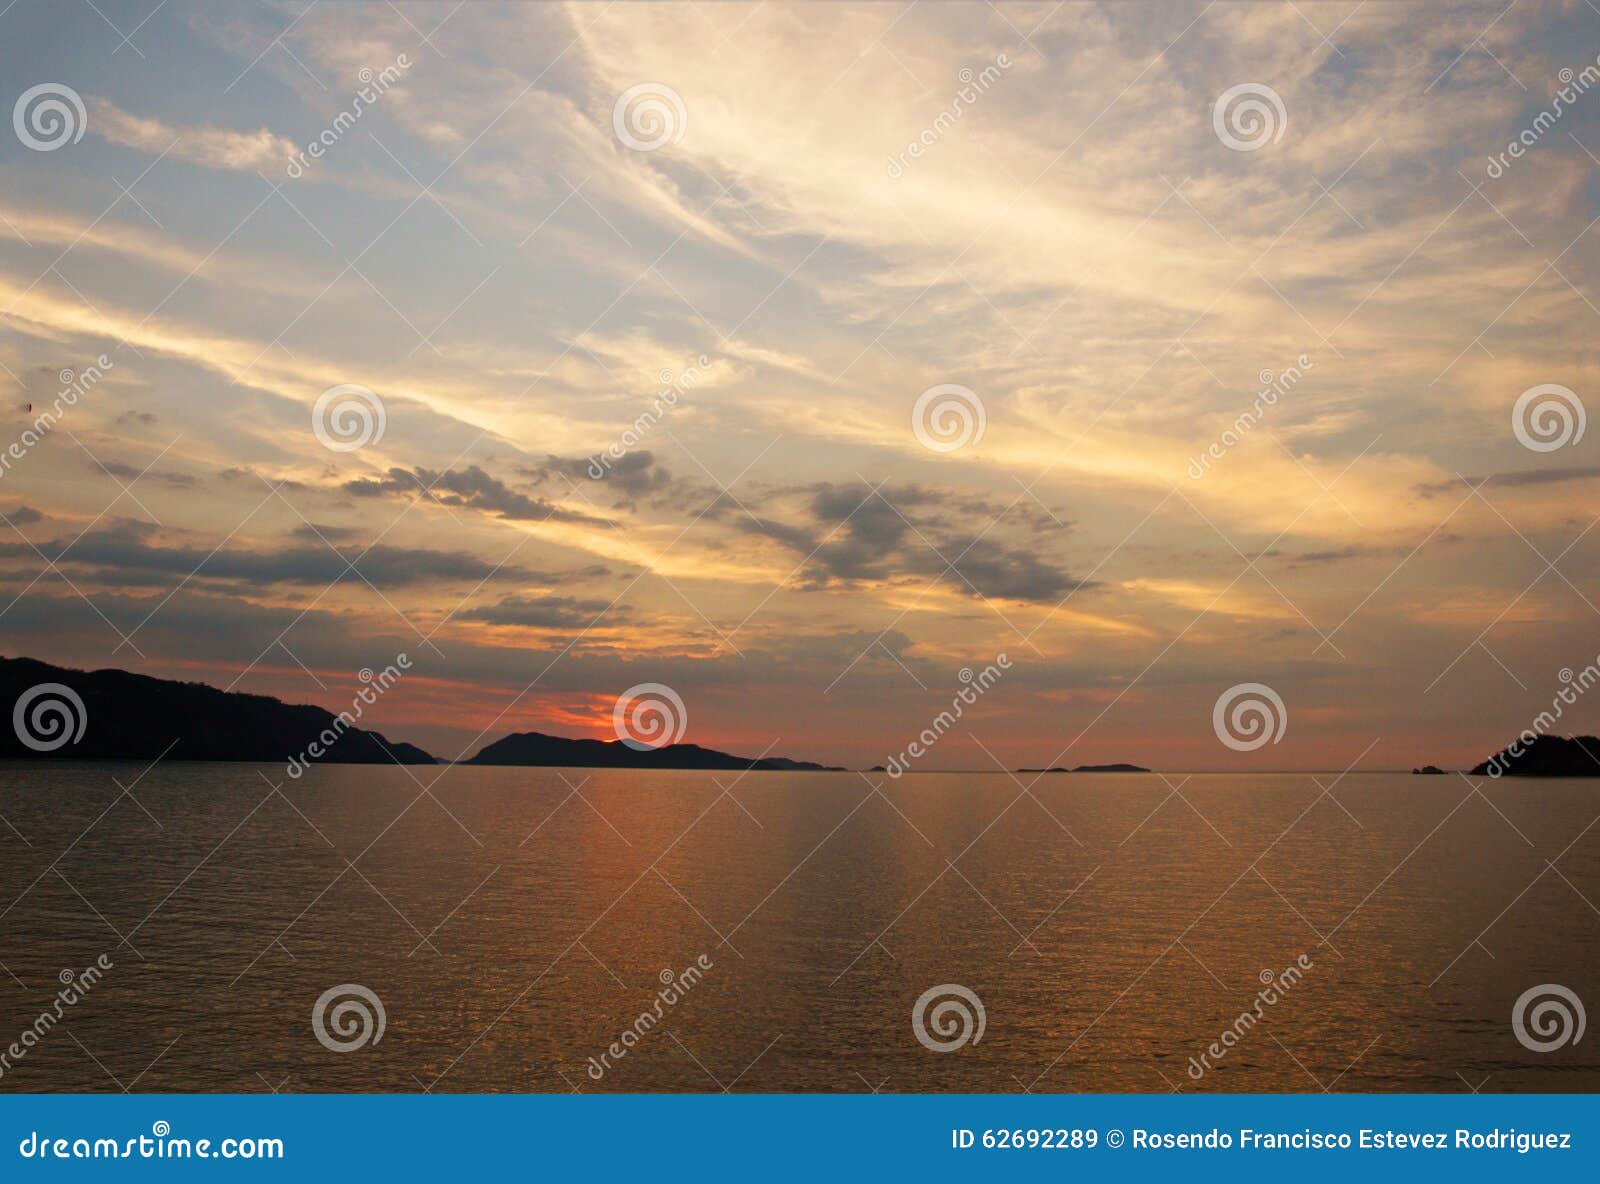 sunset in mochima